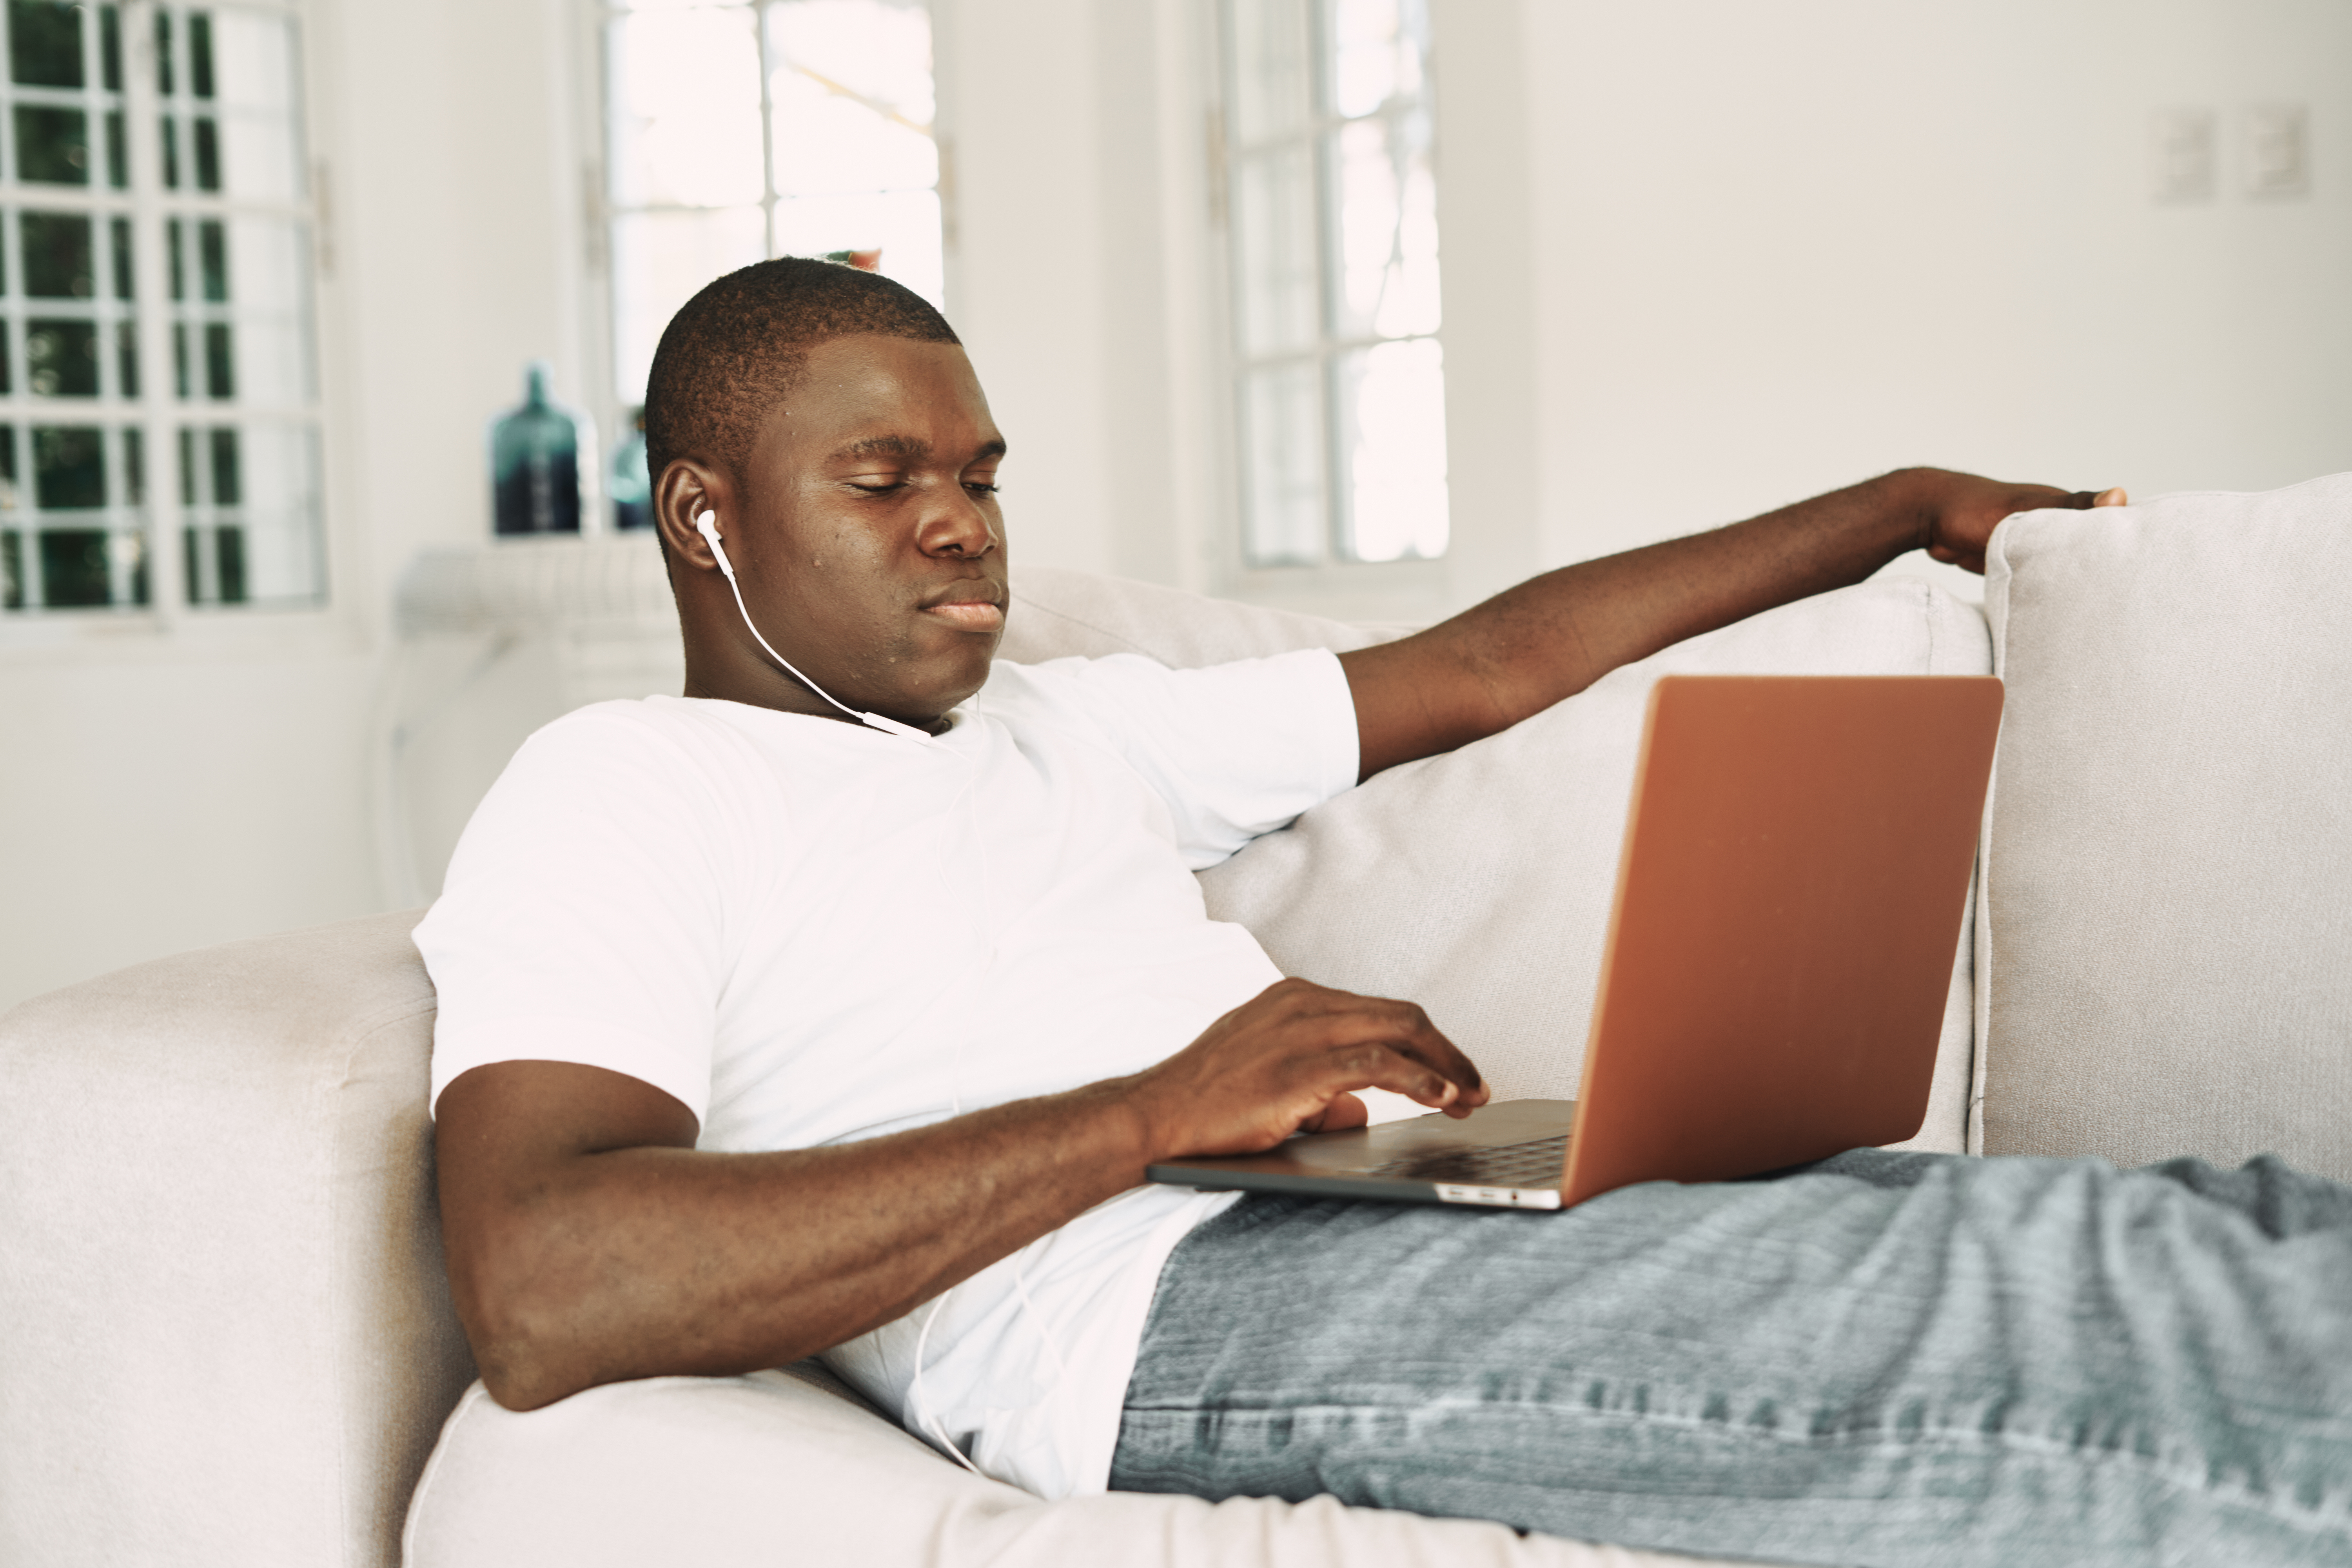 Sympatický chlapík afrického vzhľadu leží na gauči so slúchadlami a notebookom na kolenách